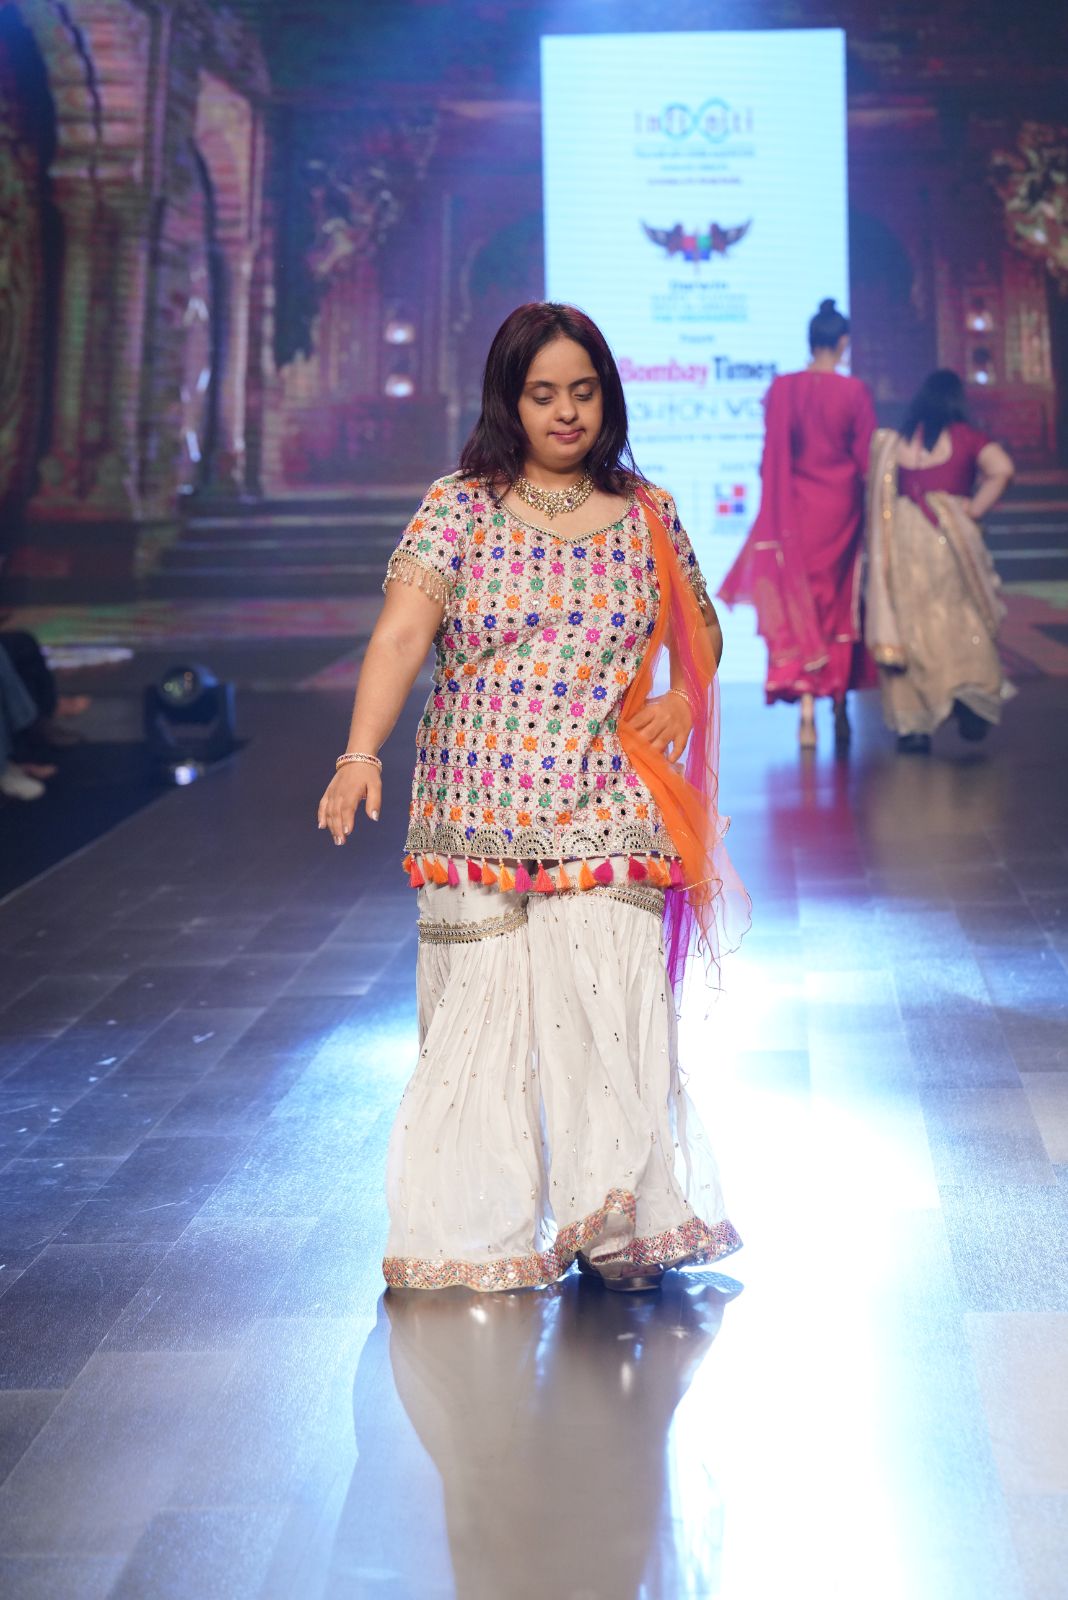 CSR Bombay Times Fashion Week malad